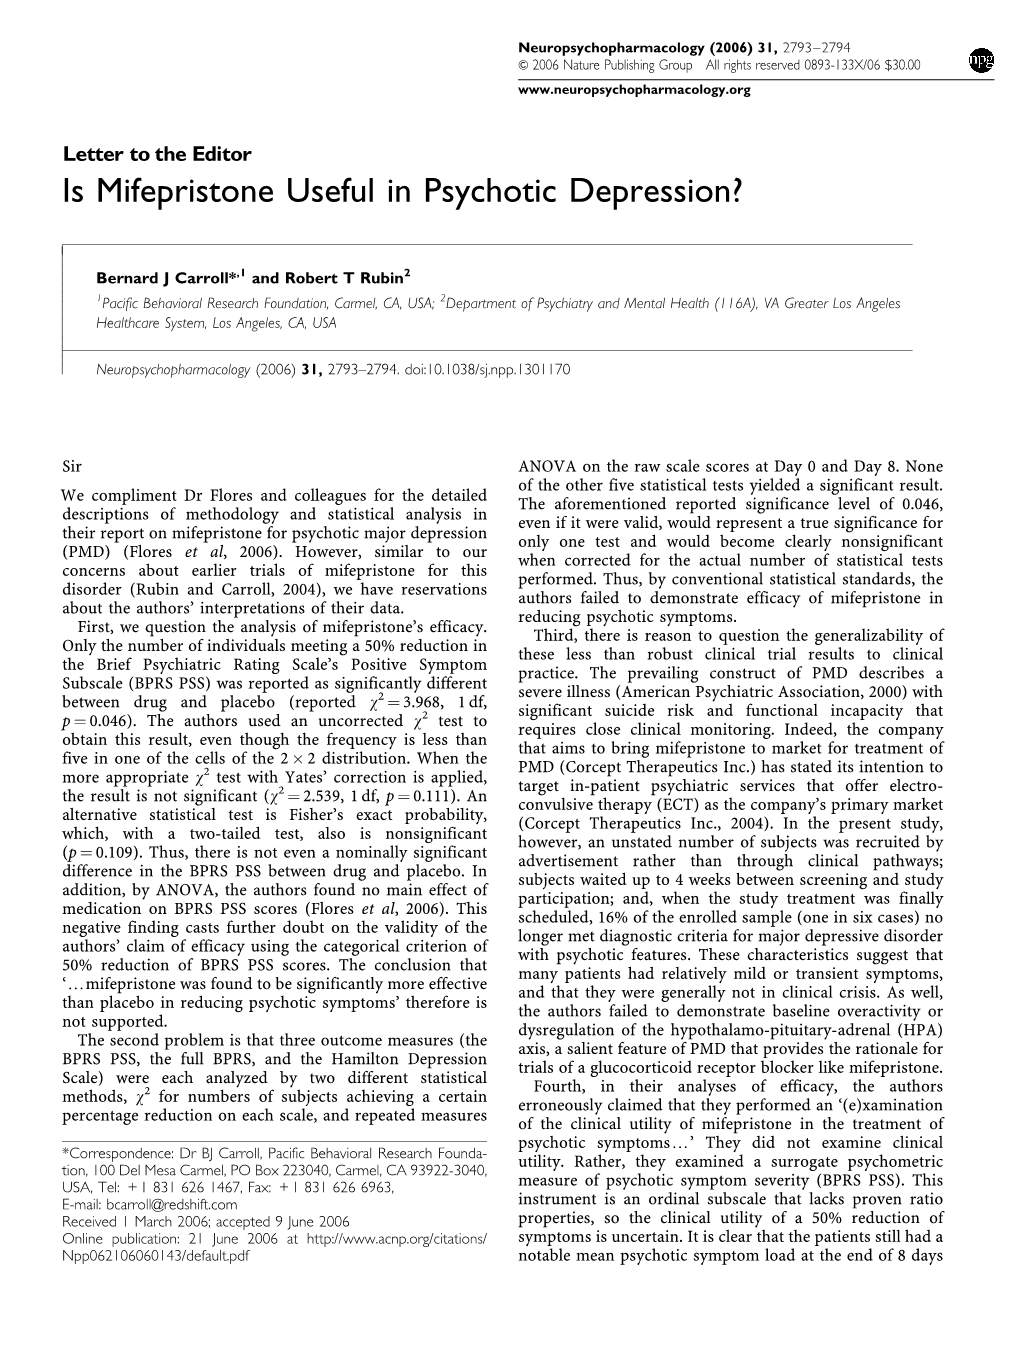 Is Mifepristone Useful in Psychotic Depression?